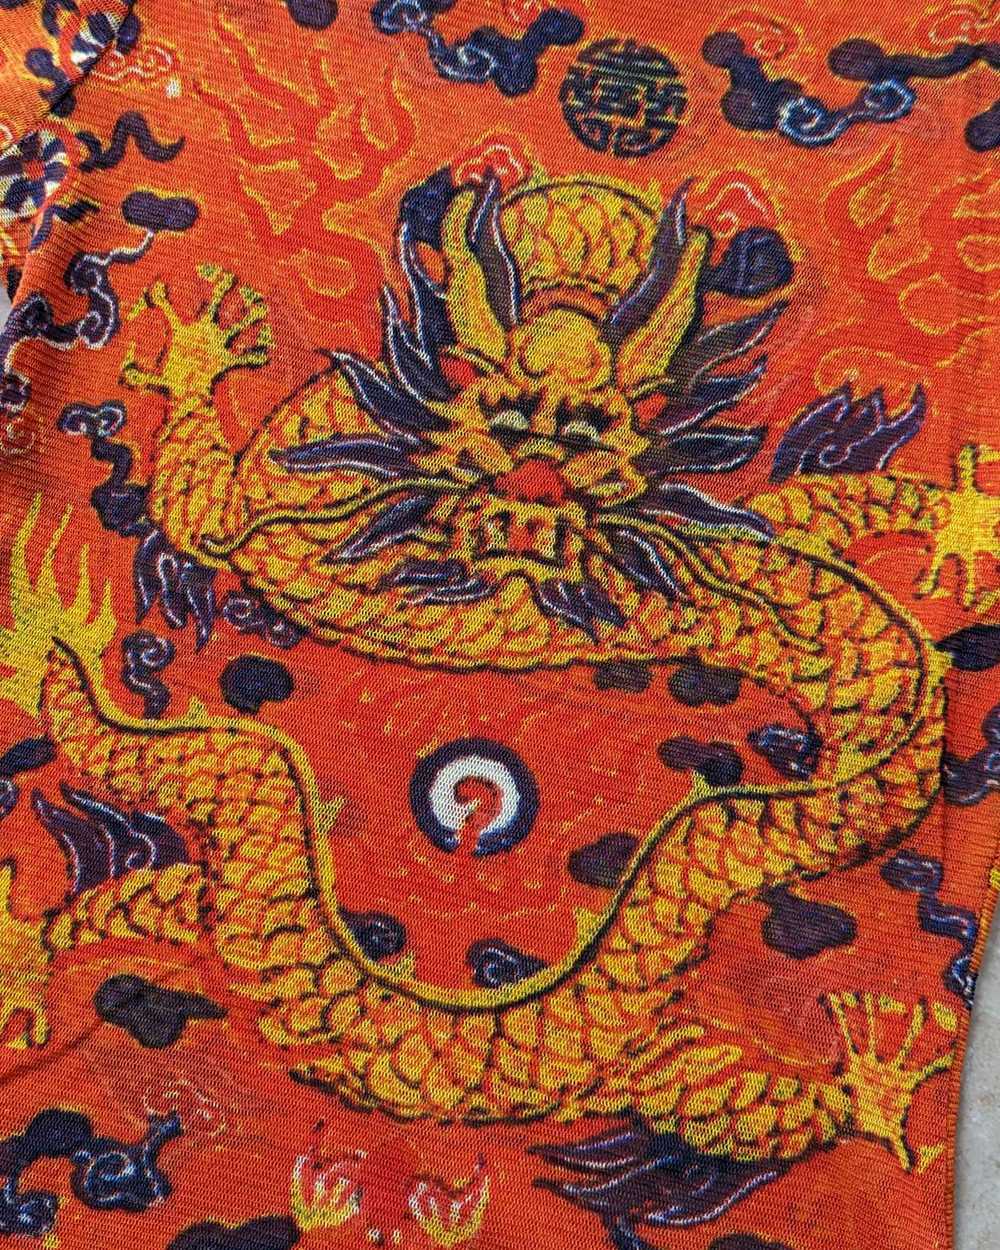 90s Vivienne Tam "Dragon Robes" Mesh Top - image 6